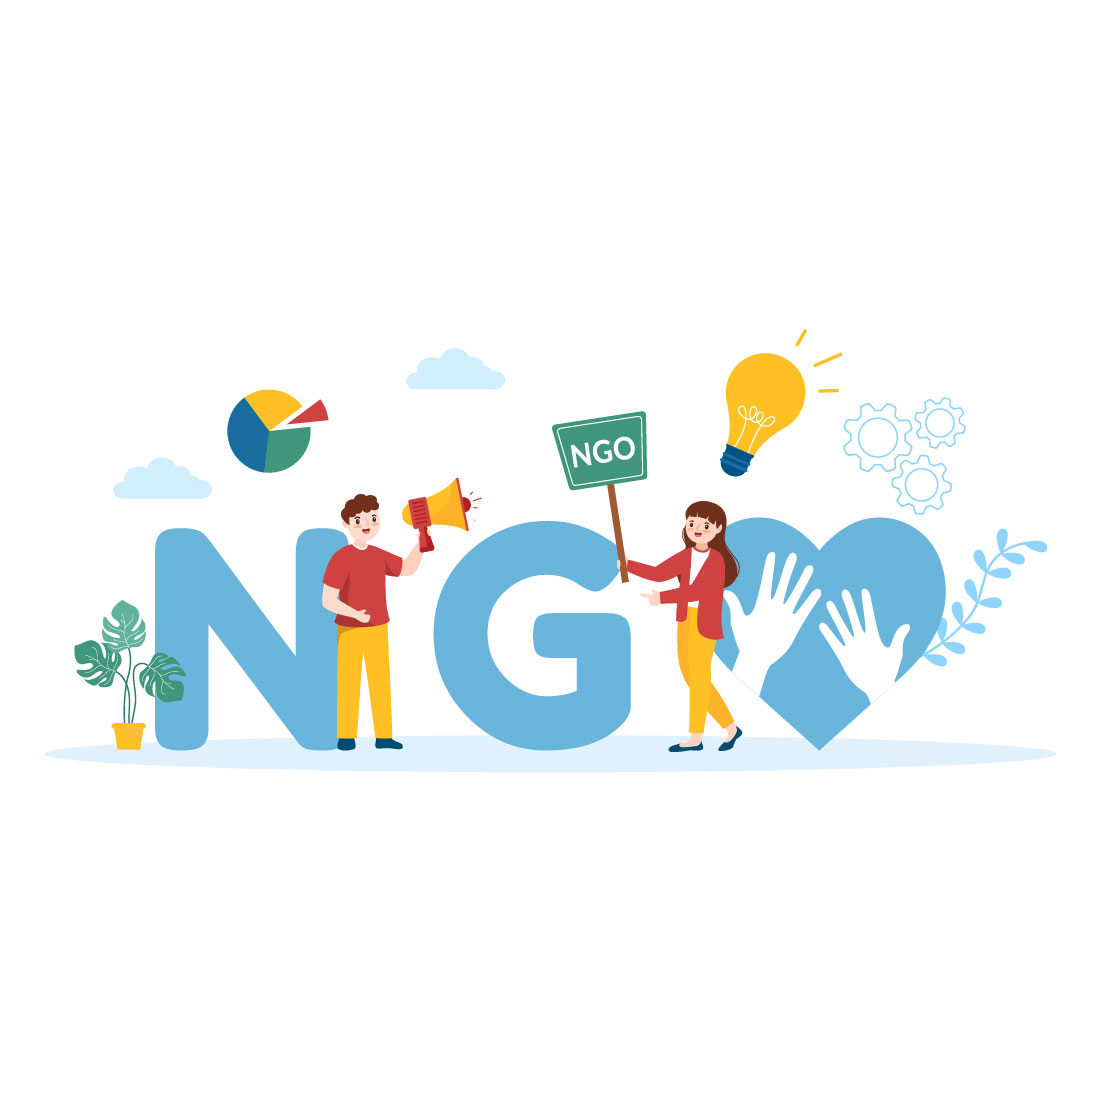 11 NGO or Non-Governmental Organization Illustration cover image.